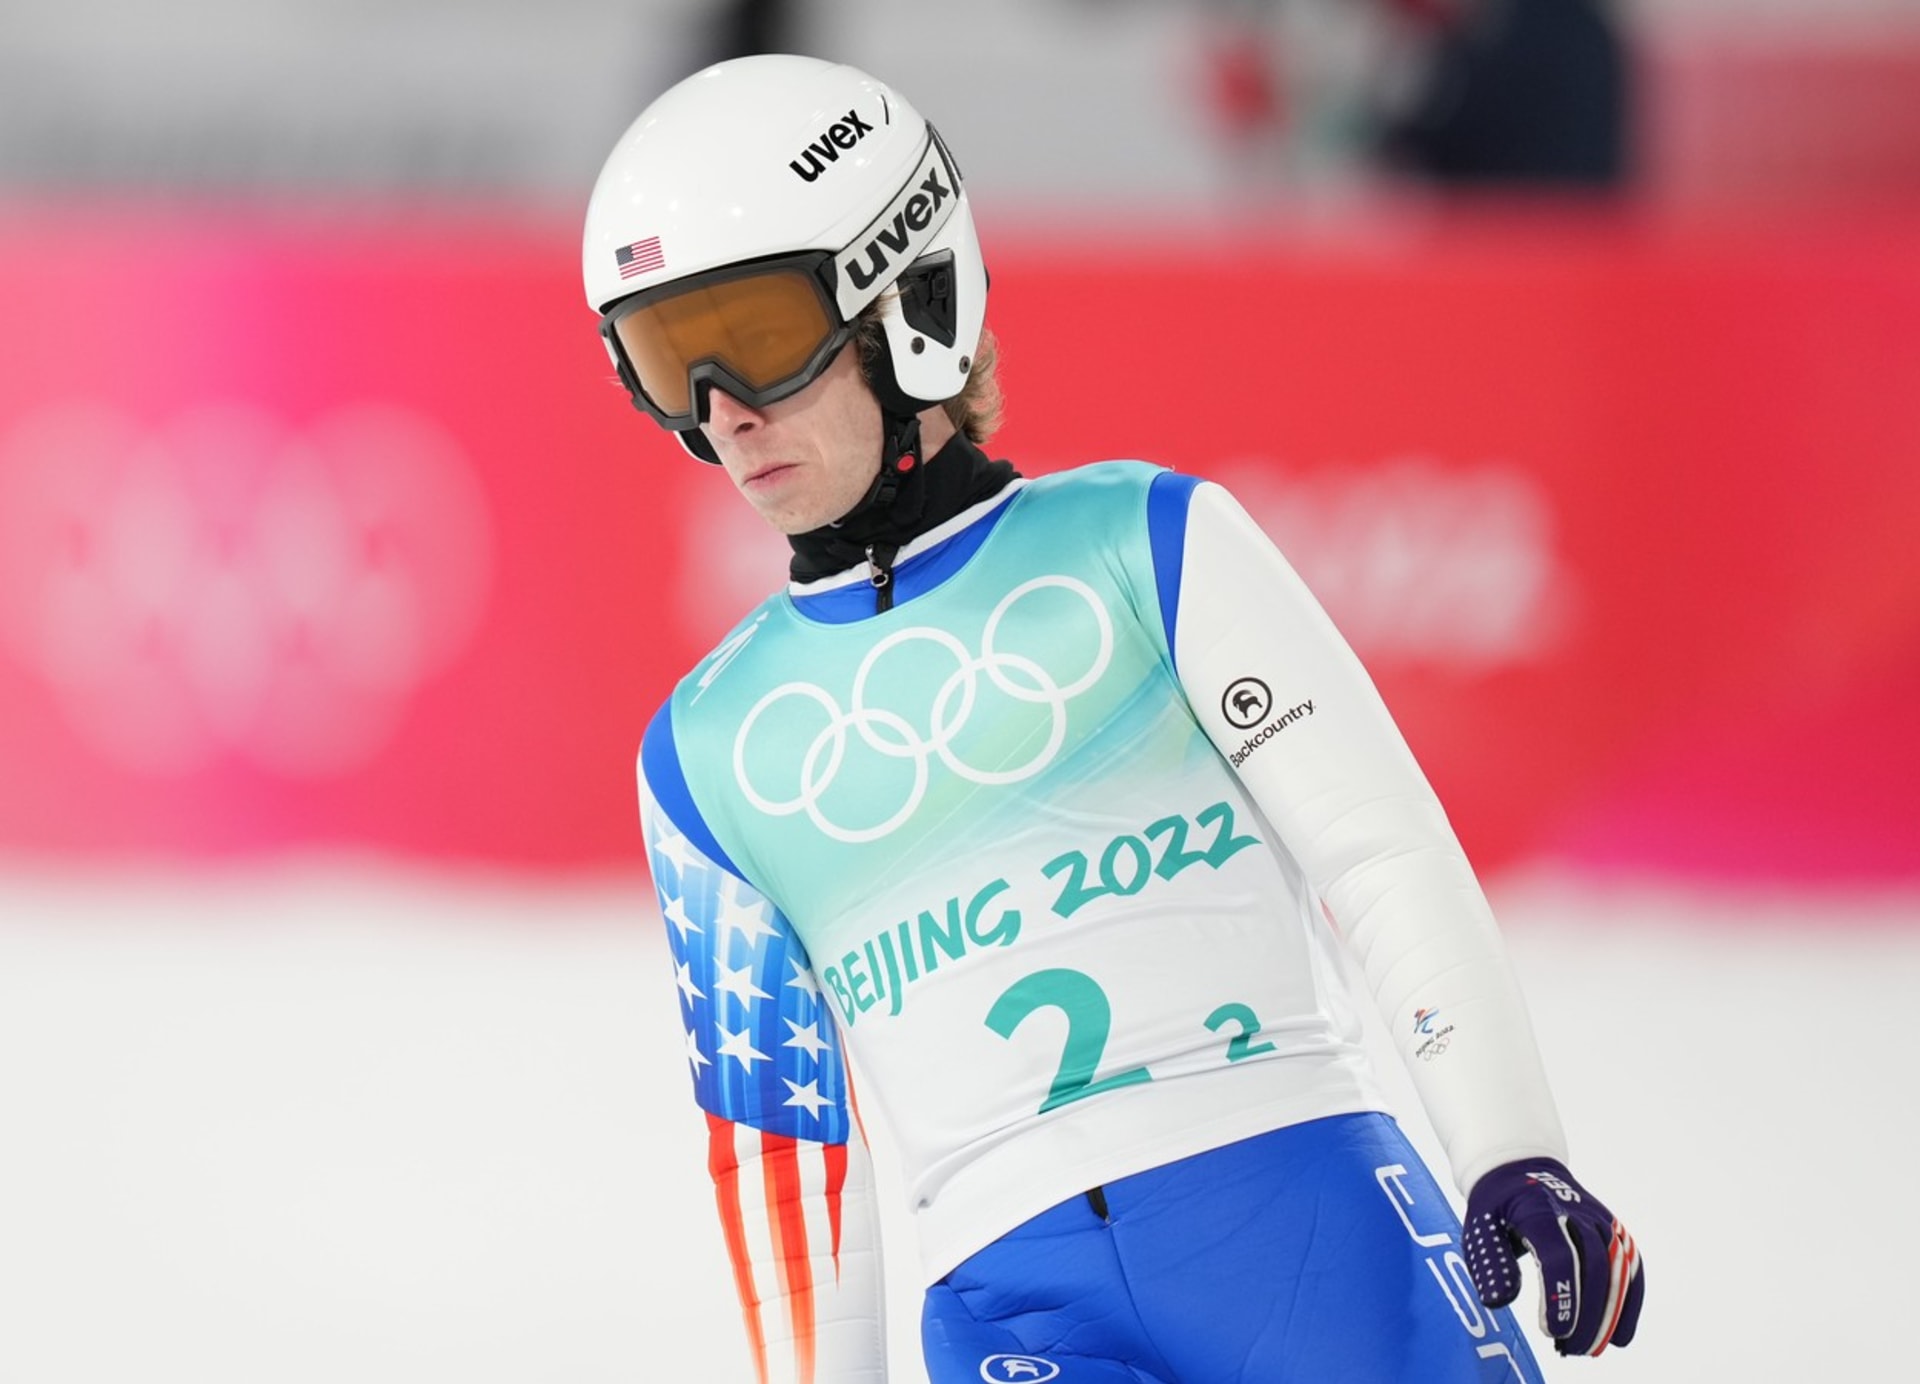 Skokan na lyžích Patrick Gasienica na olympiádě v Pekingu